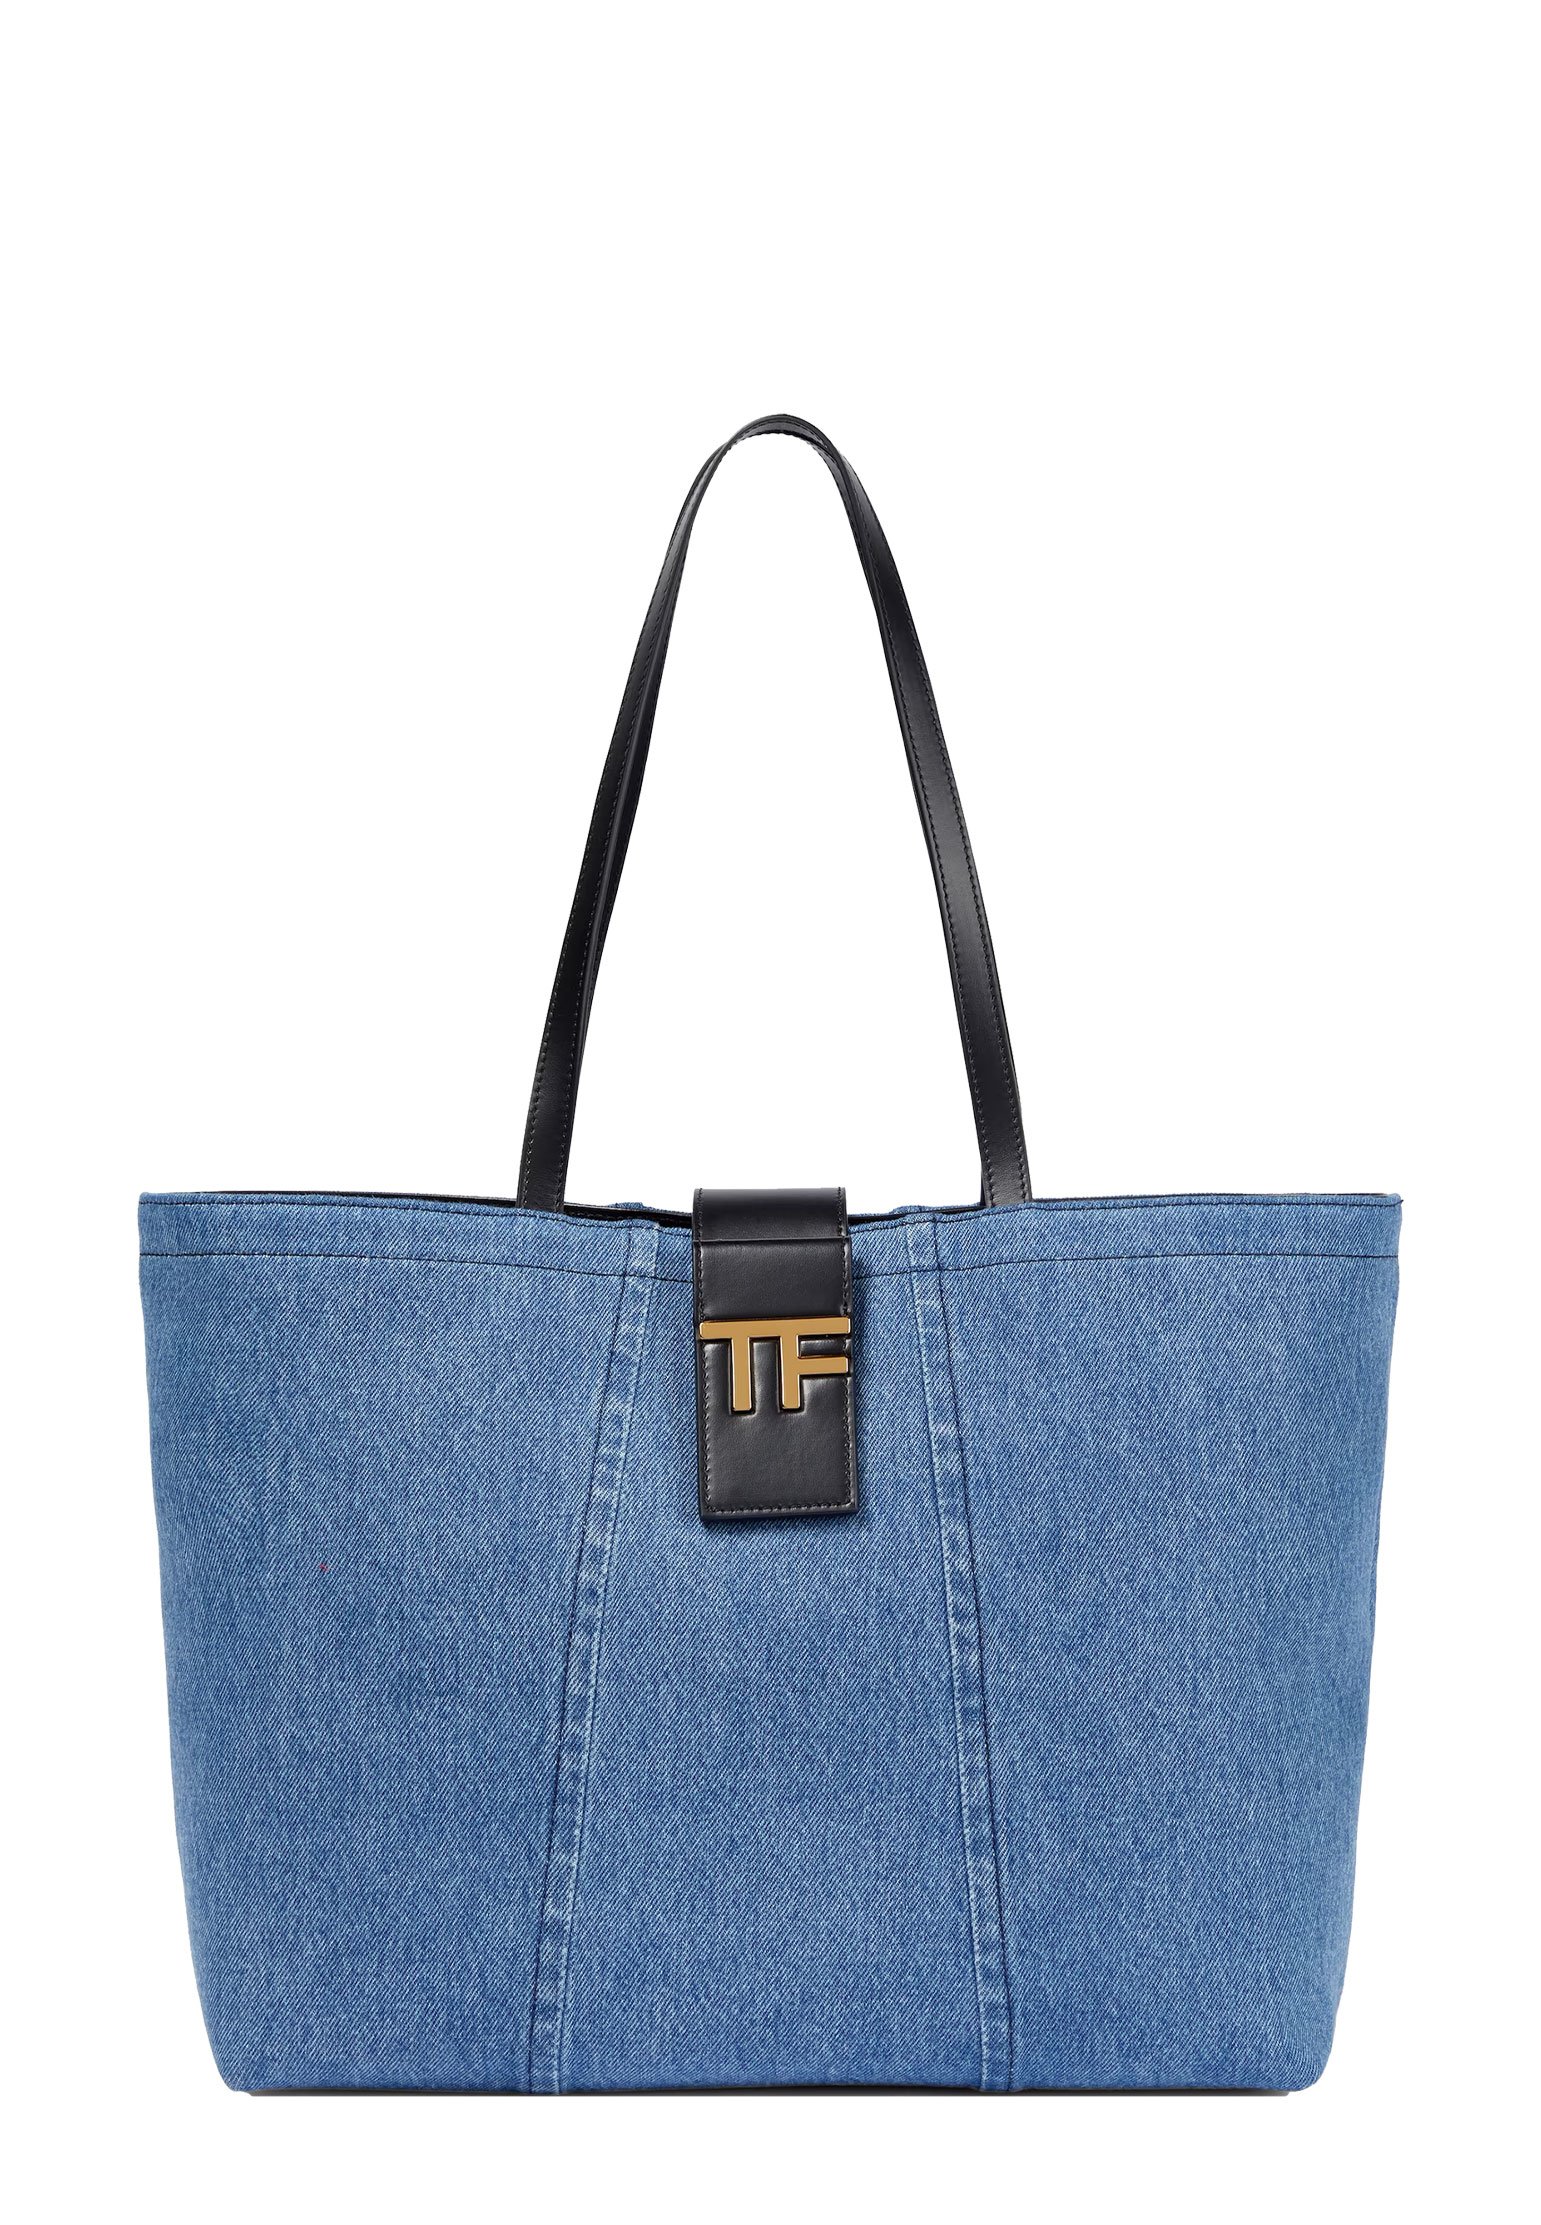 Bag TOM FORD Color: blue (Code: 2976) in online store Allure